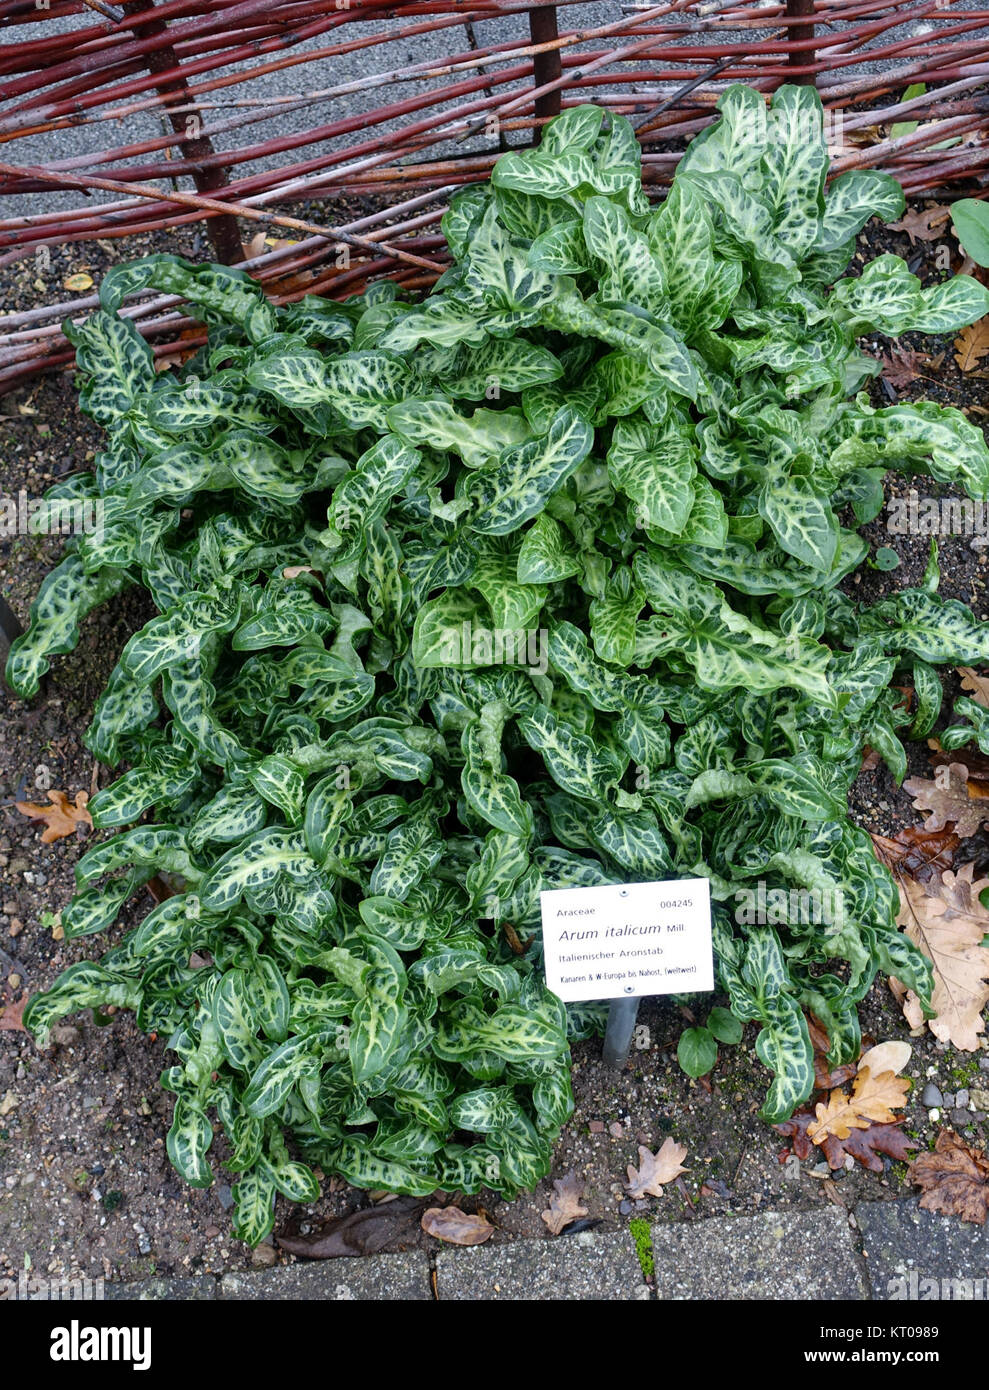 Arum italicum - Botanischer Garten - Heidelberg, Germany - DSC00892 Stock Photo